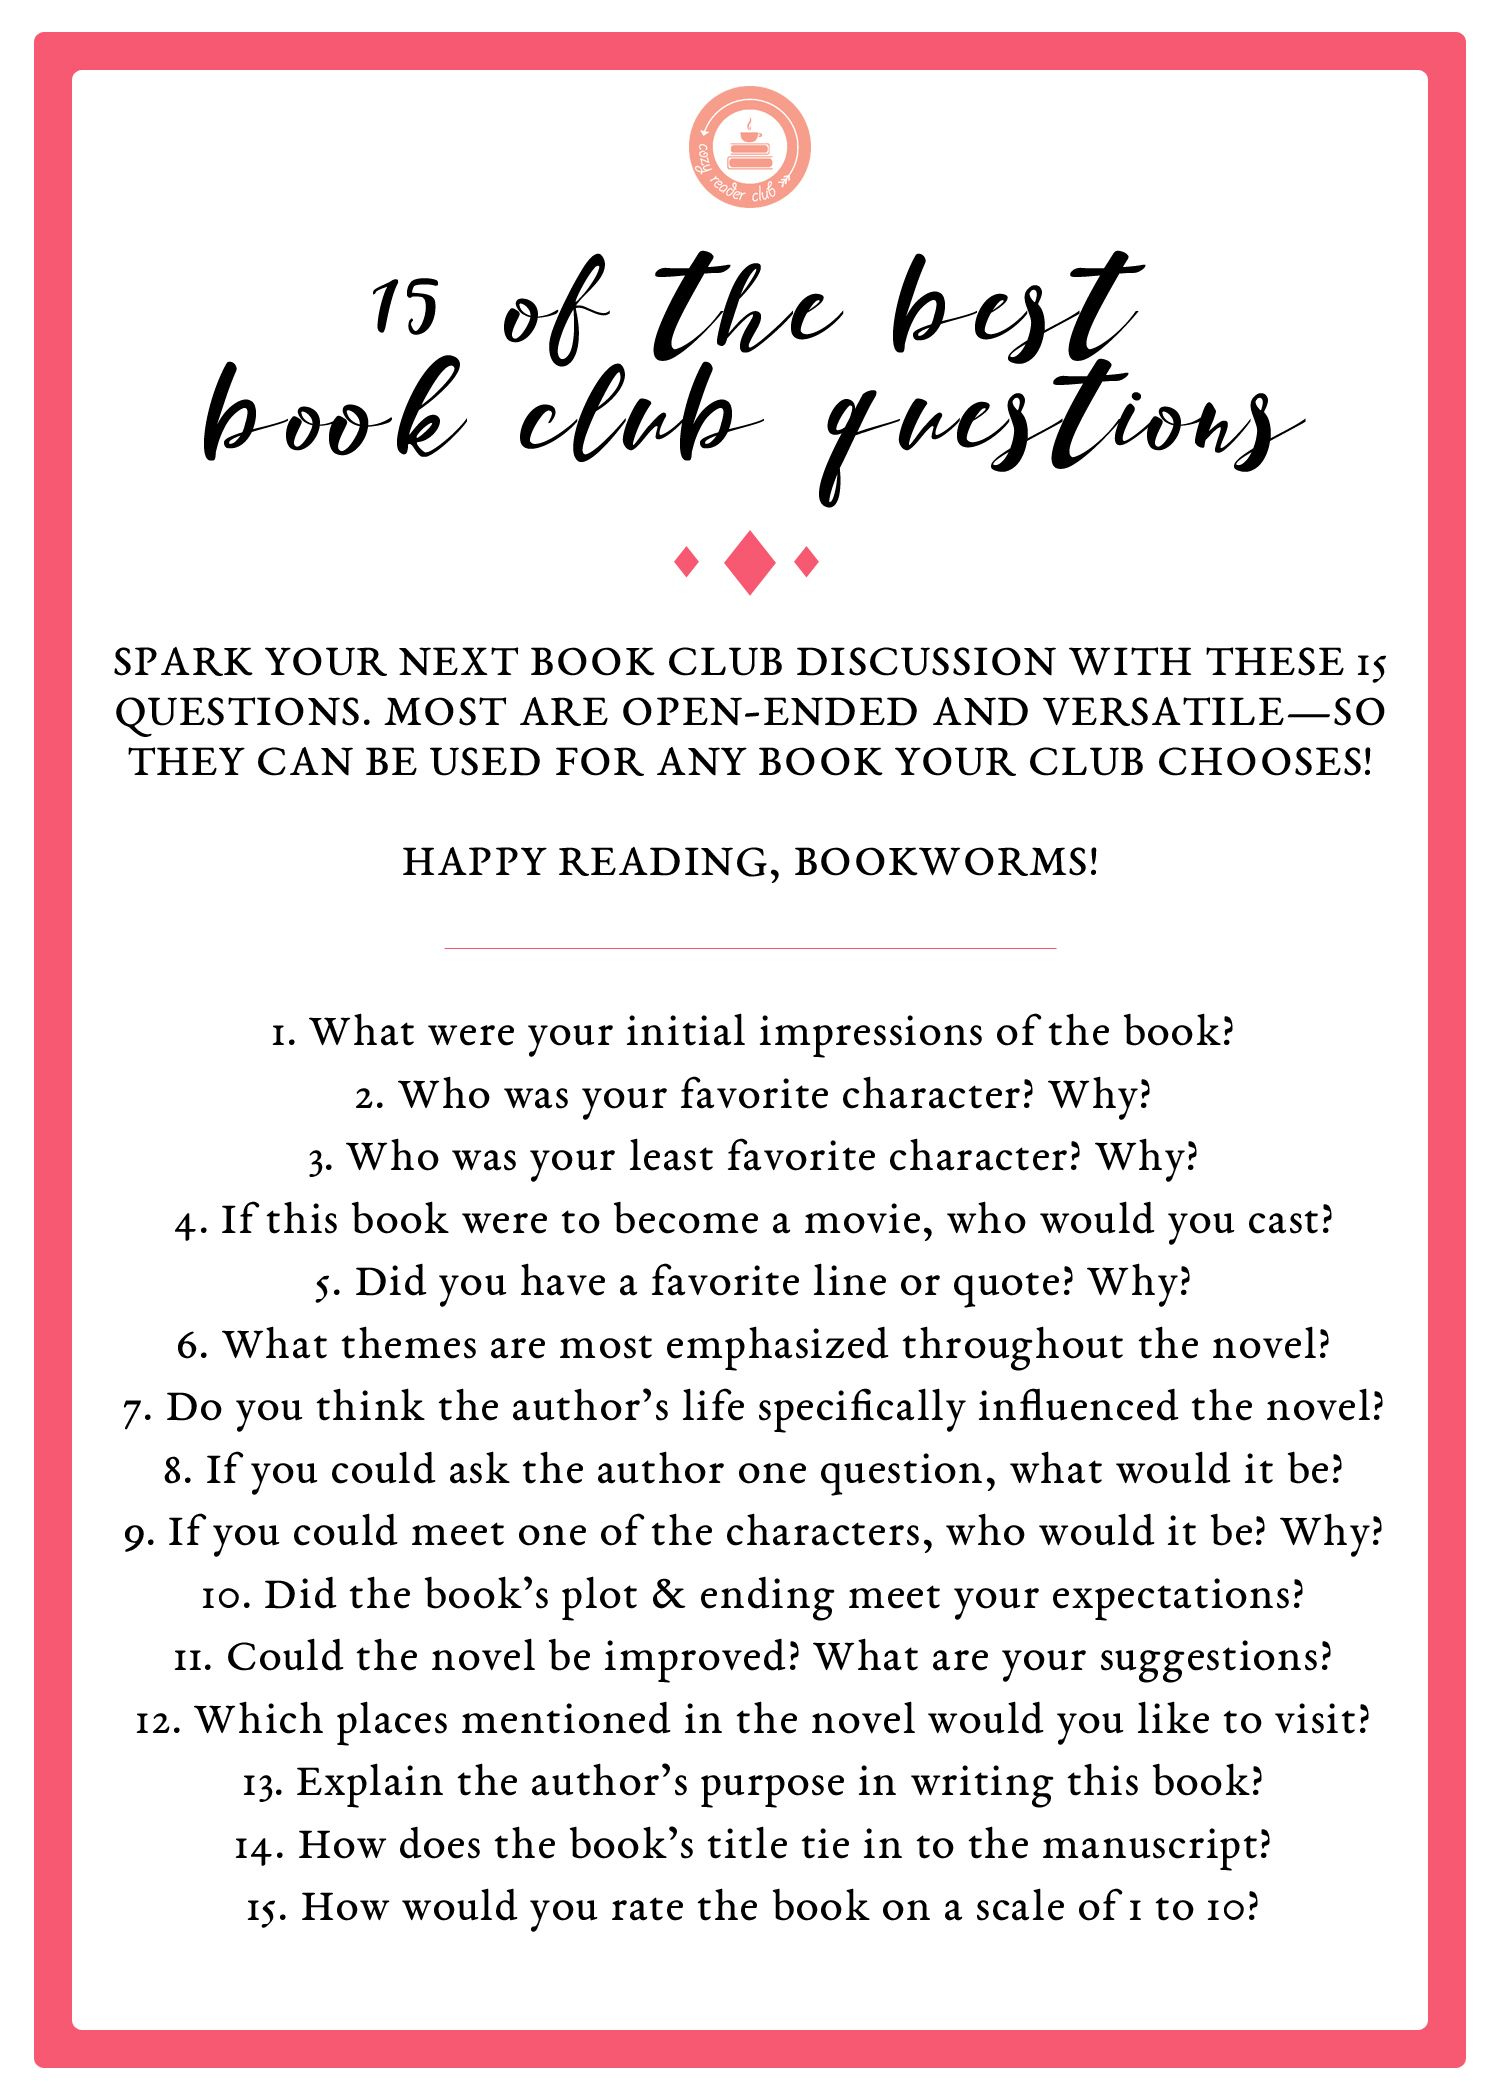 CRC BookClubQuestions Book Club Questions Book Club Names Book Club 